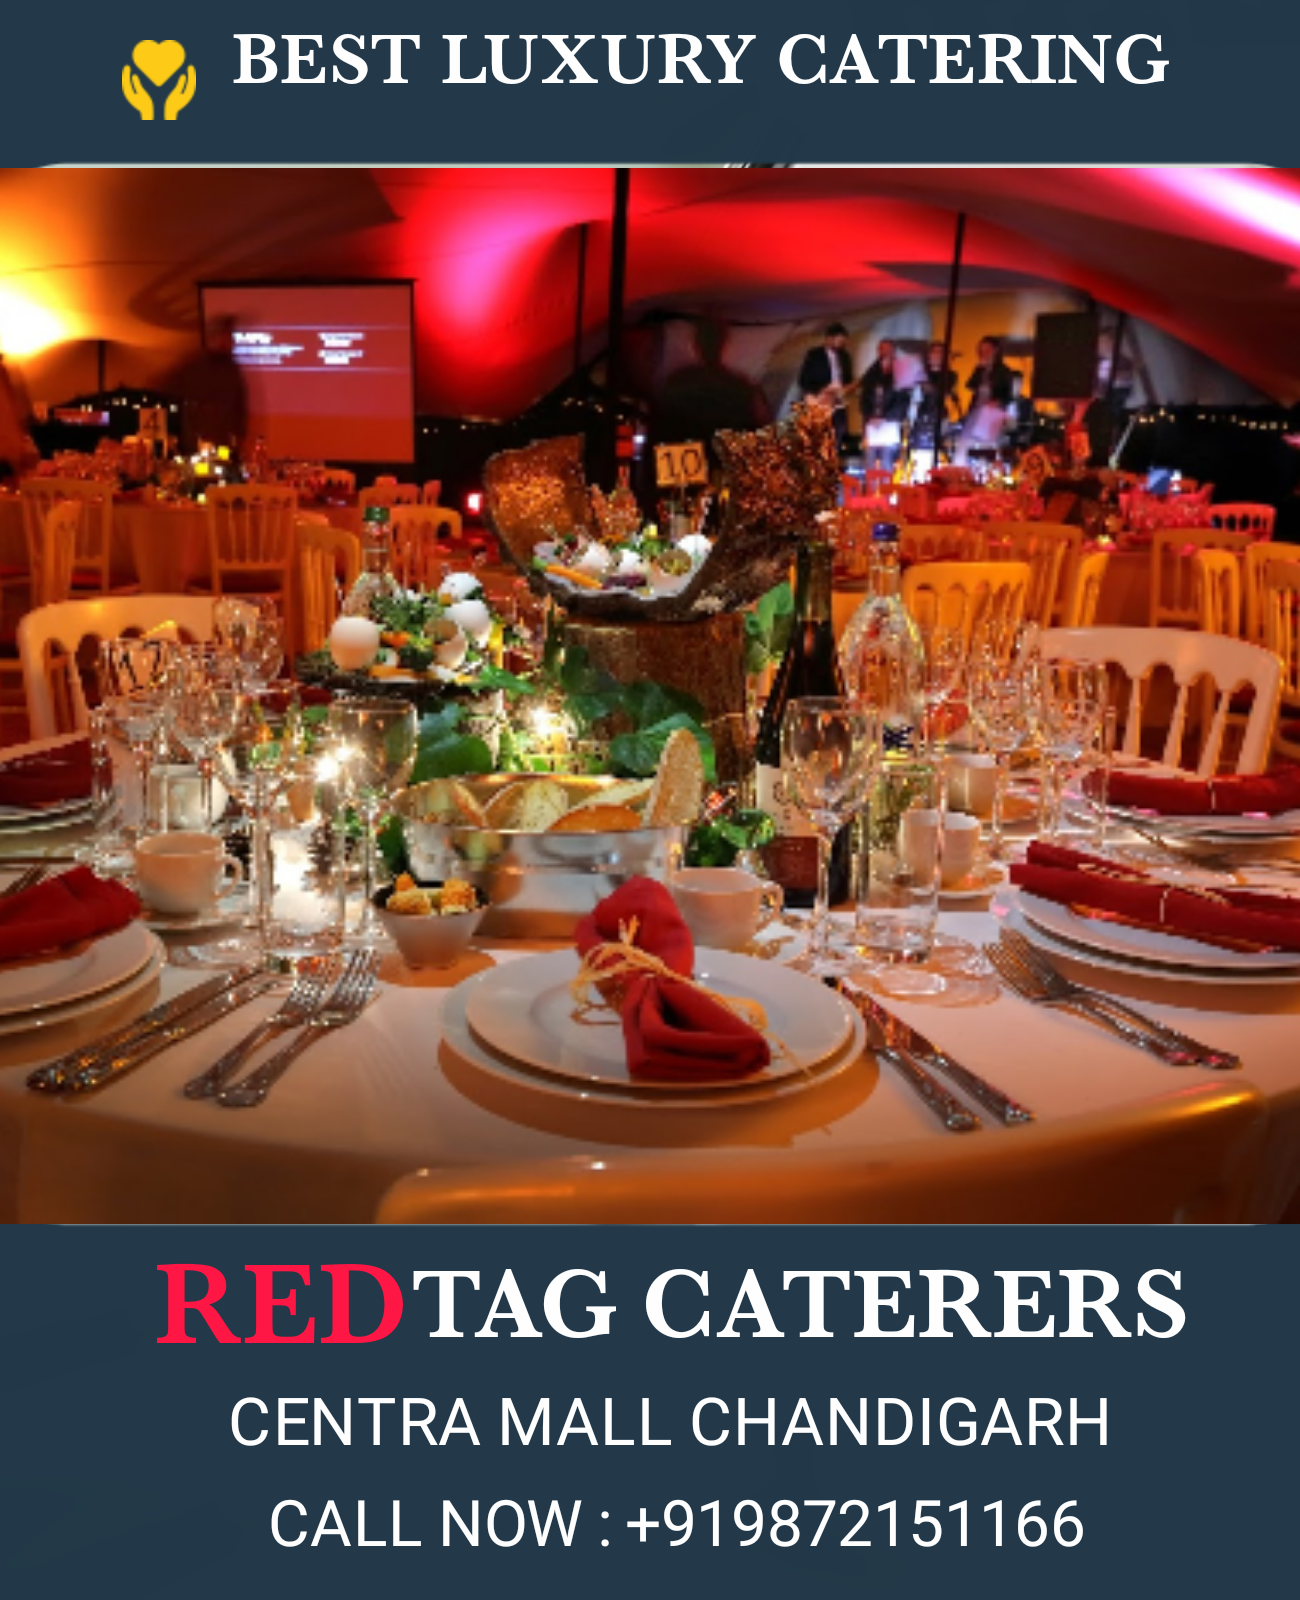 Best corporate event catering service in zirakpur Punjab  | Red Tag Caterers | Best caterers in zirkpur Punjab  - GL46623